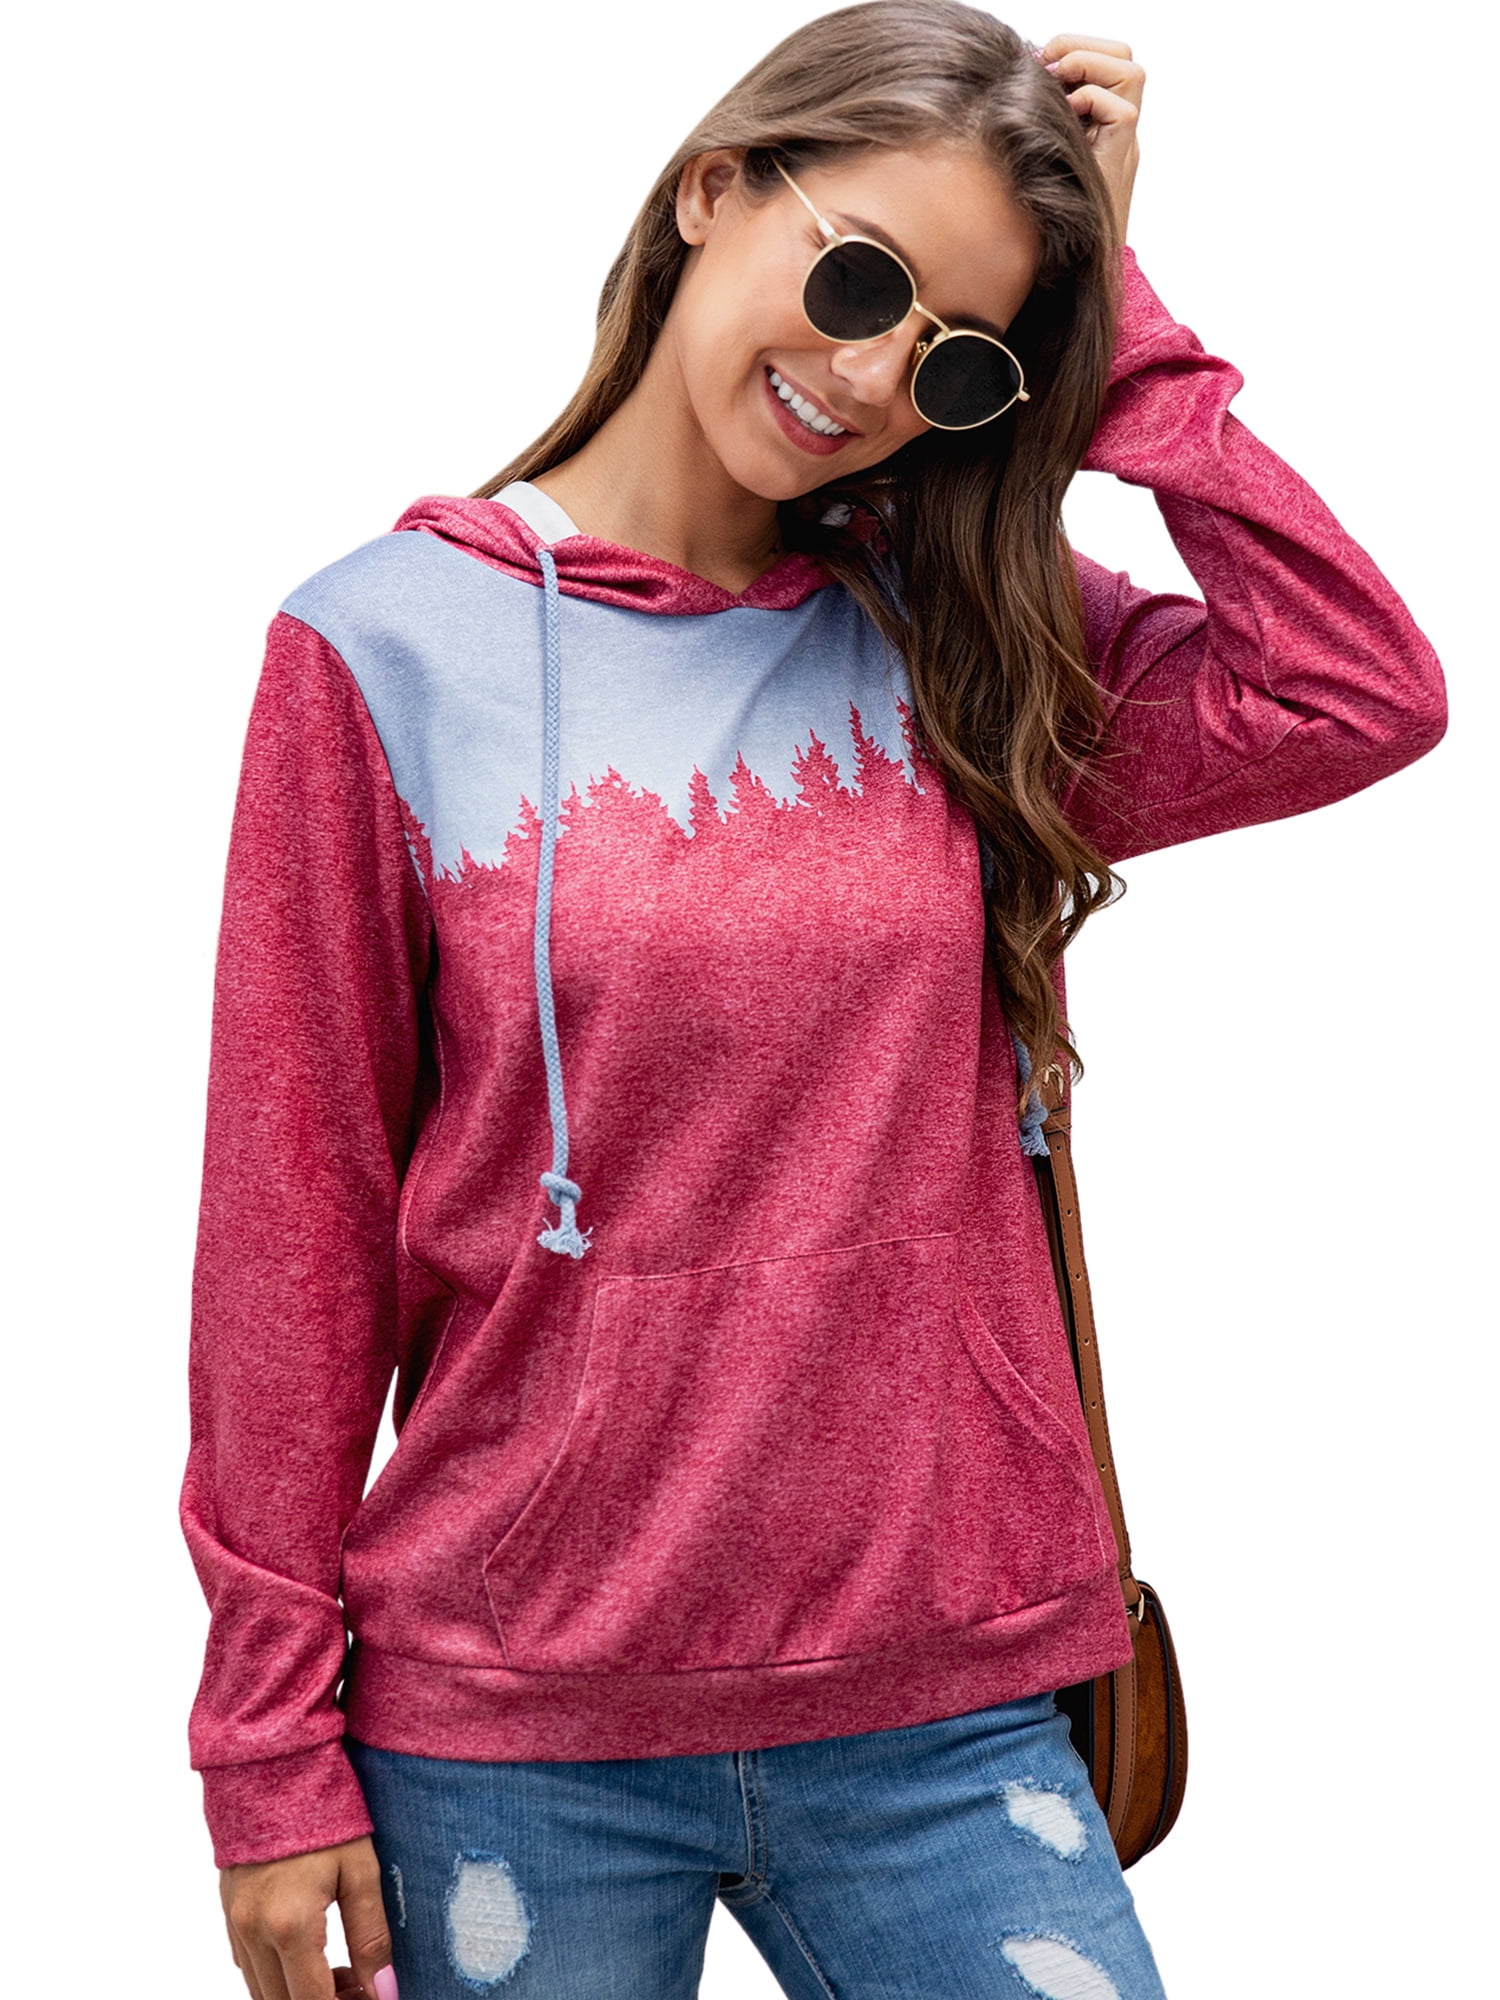 NEWTECHNOLOGYY - Tie Dye Sweatshirts Hoodies Women Sweatshirt Casual